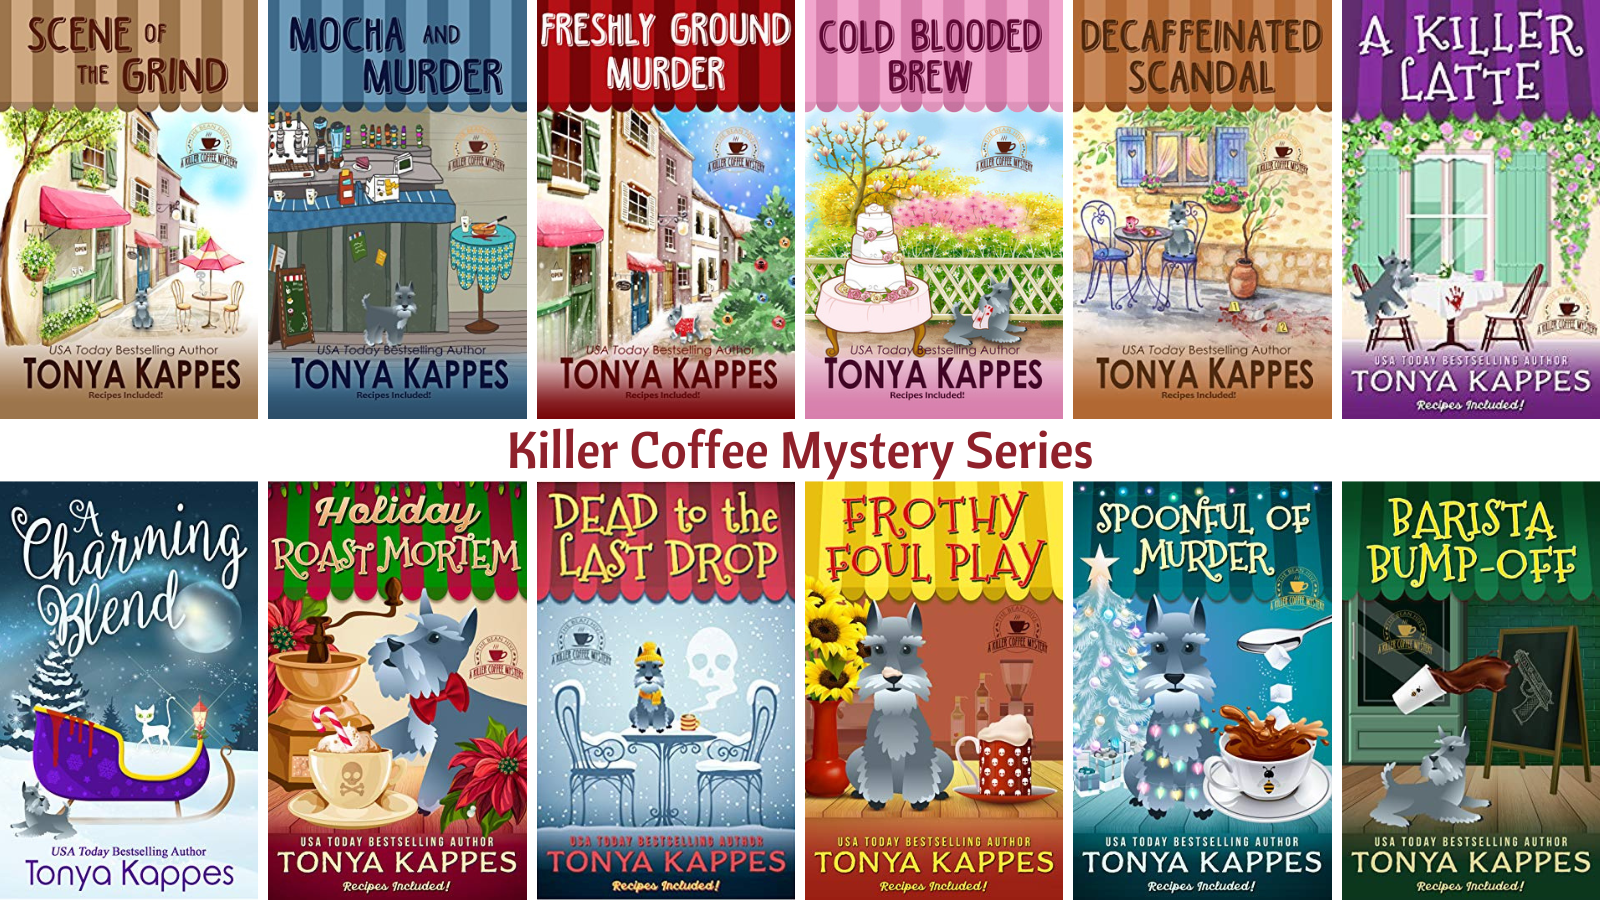 The Killer Coffee Series